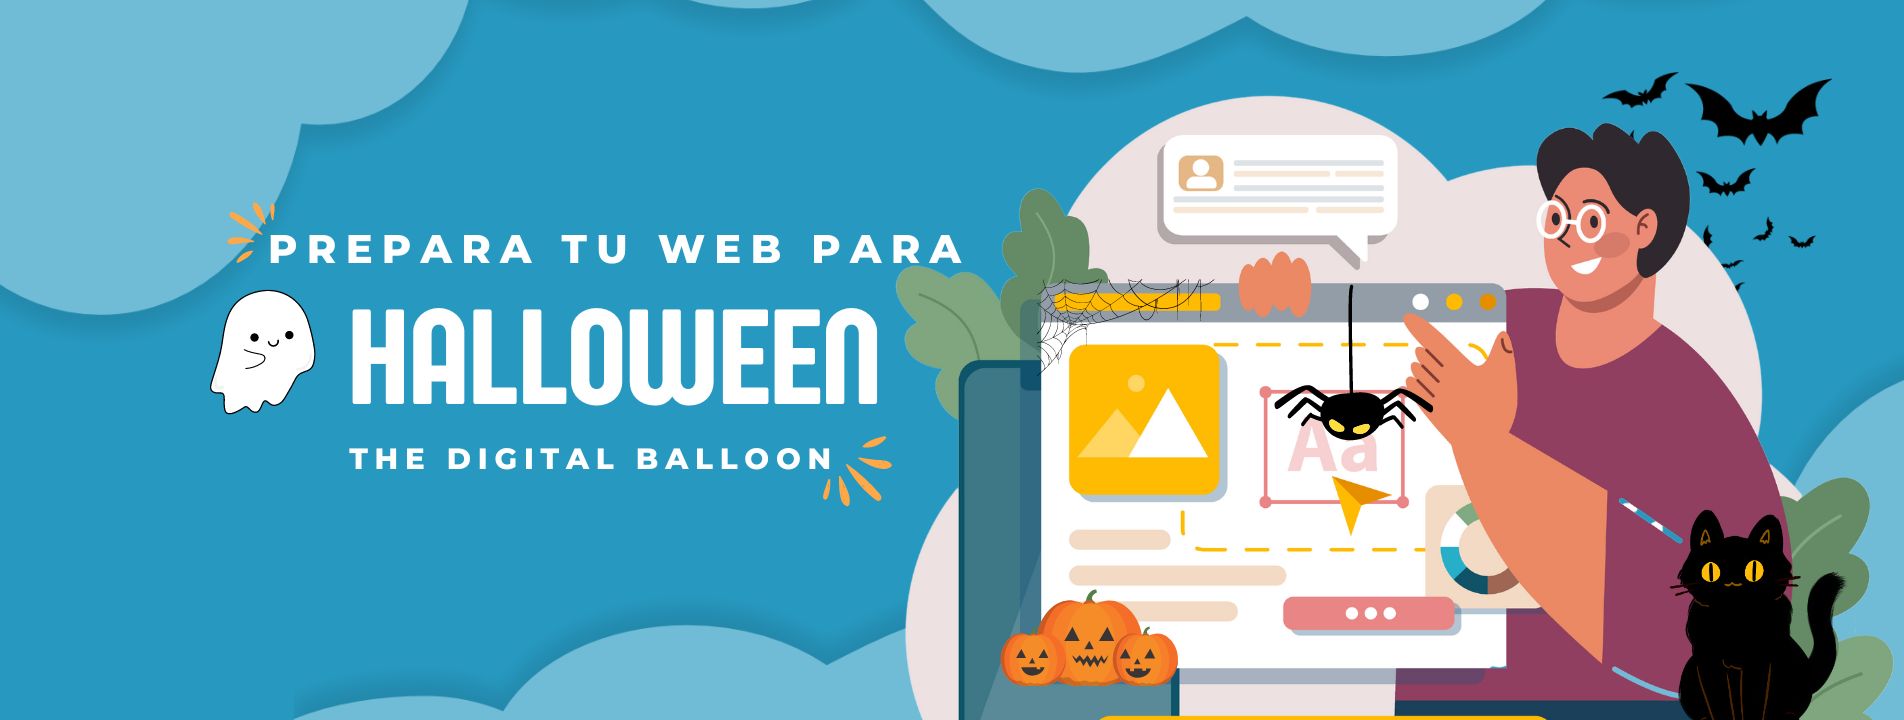 Prepara Tu Web para Halloween: Consejos mejorar tu SEO